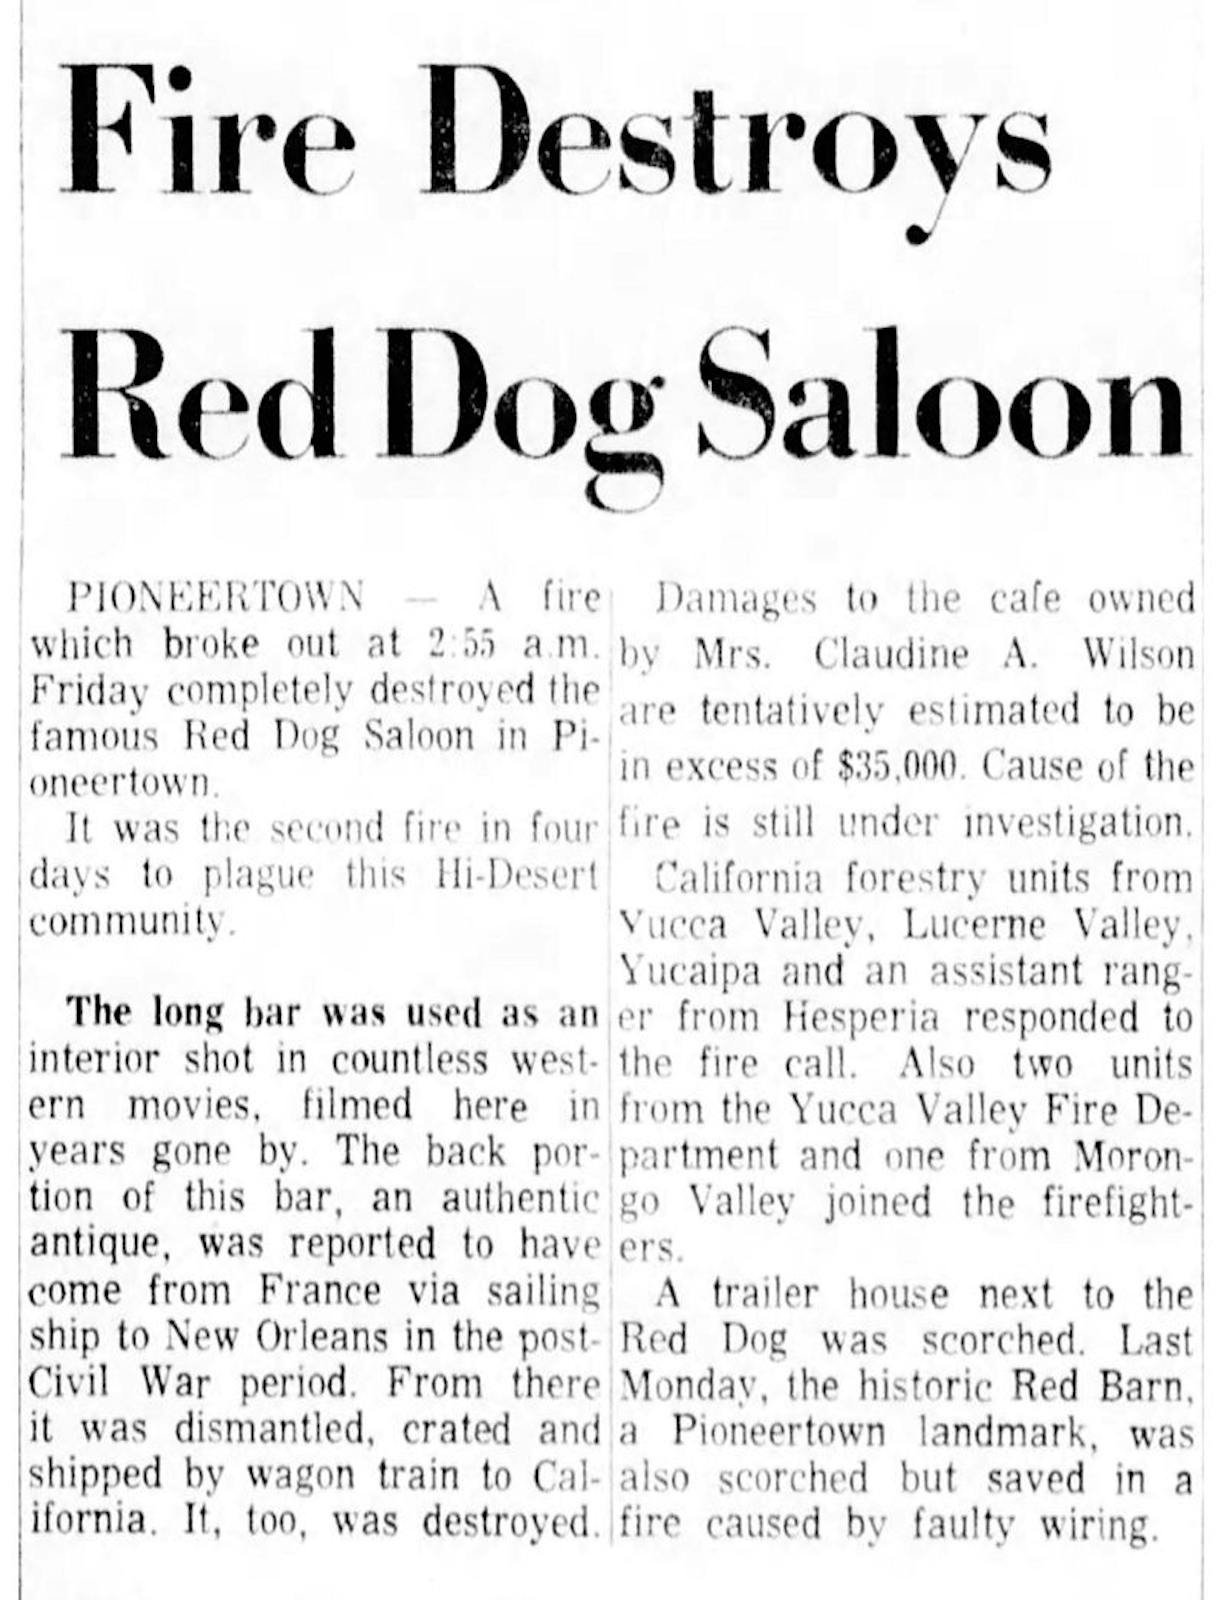 Apr. 9, 1966 - The San Bernardino County Sun article clipping